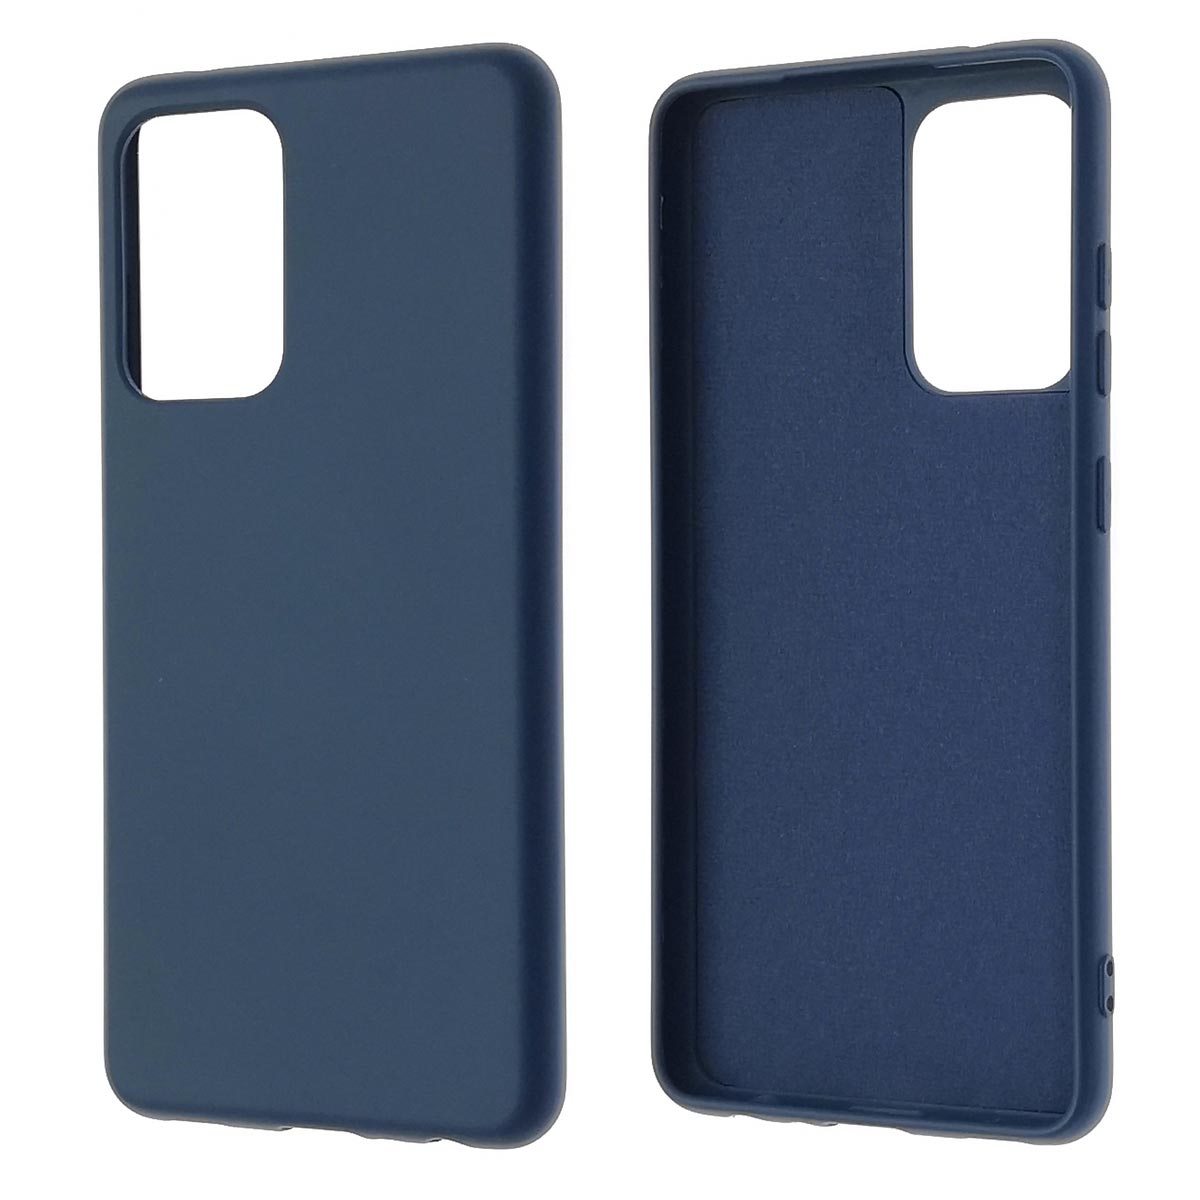 Чехол накладка Silicon Cover для SAMSUNG Galaxy A52 (SM-A525F), силикон, бархат, цвет синий кобальт